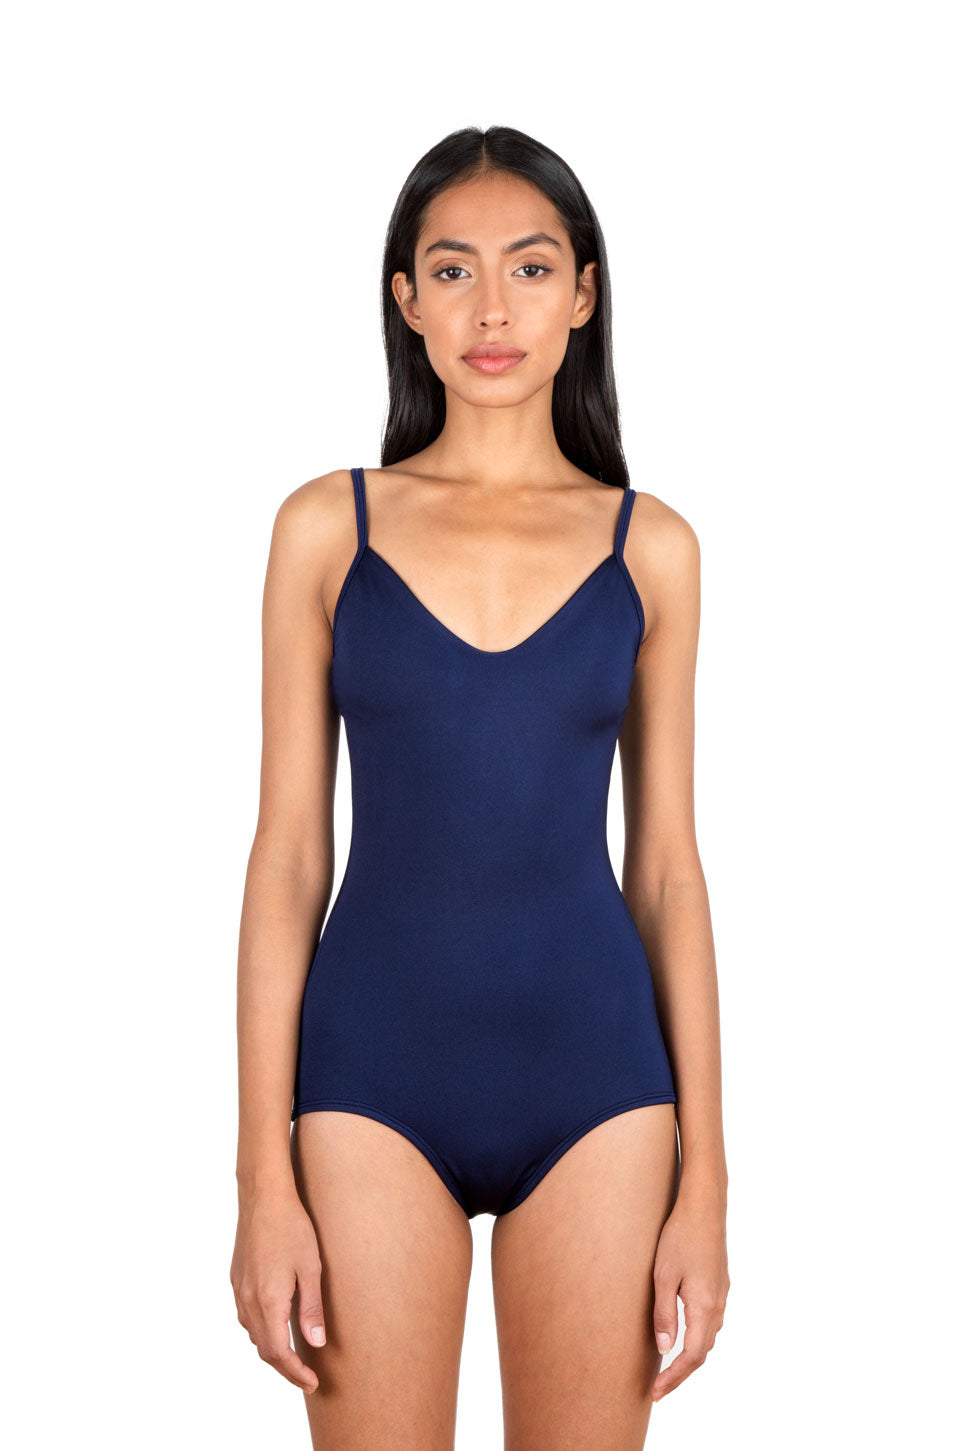 The Foxglove Maillot - Minnow Bathers Swimwear